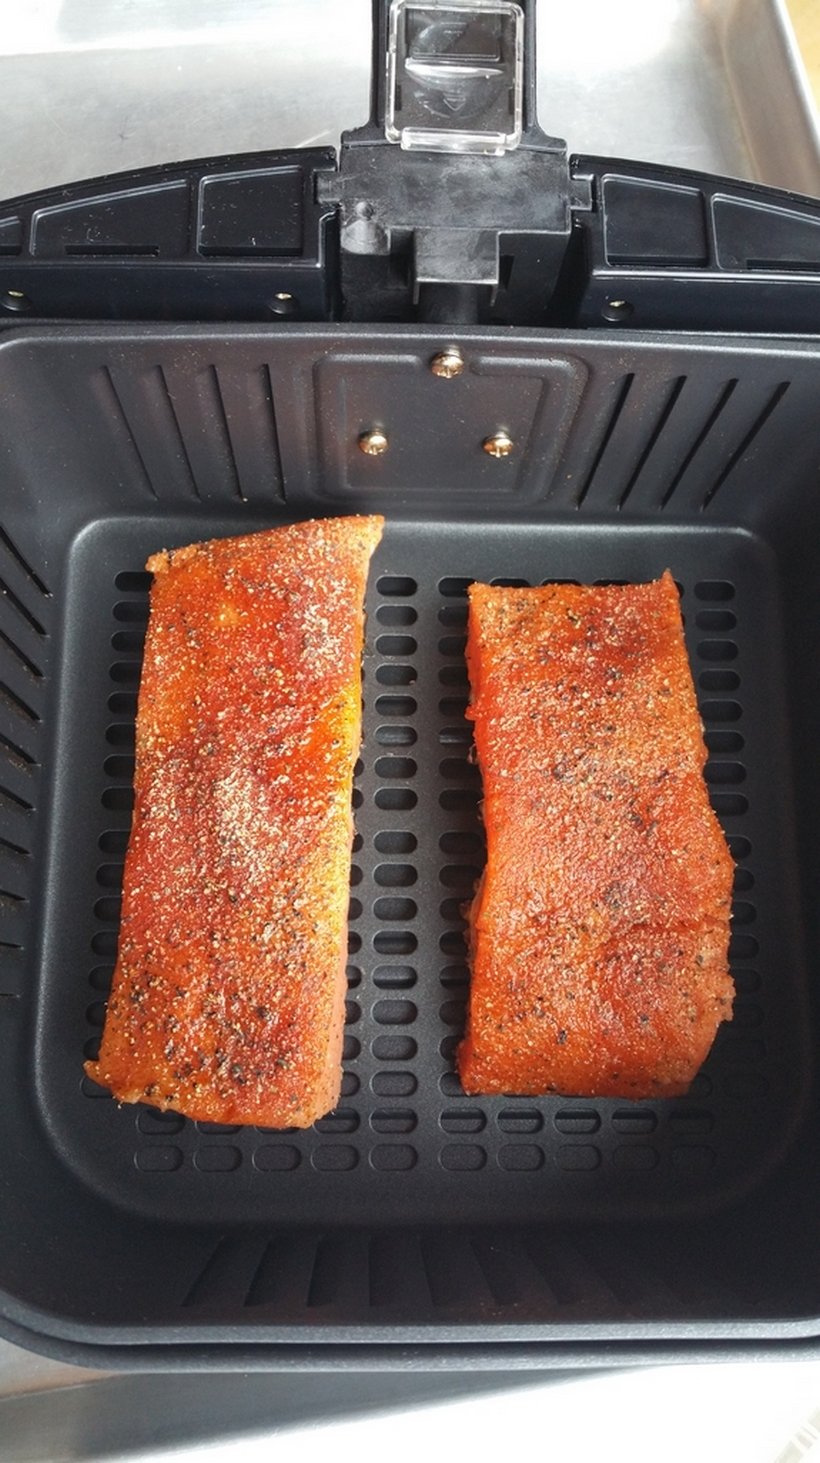 salmon fillets in an air fryer basket